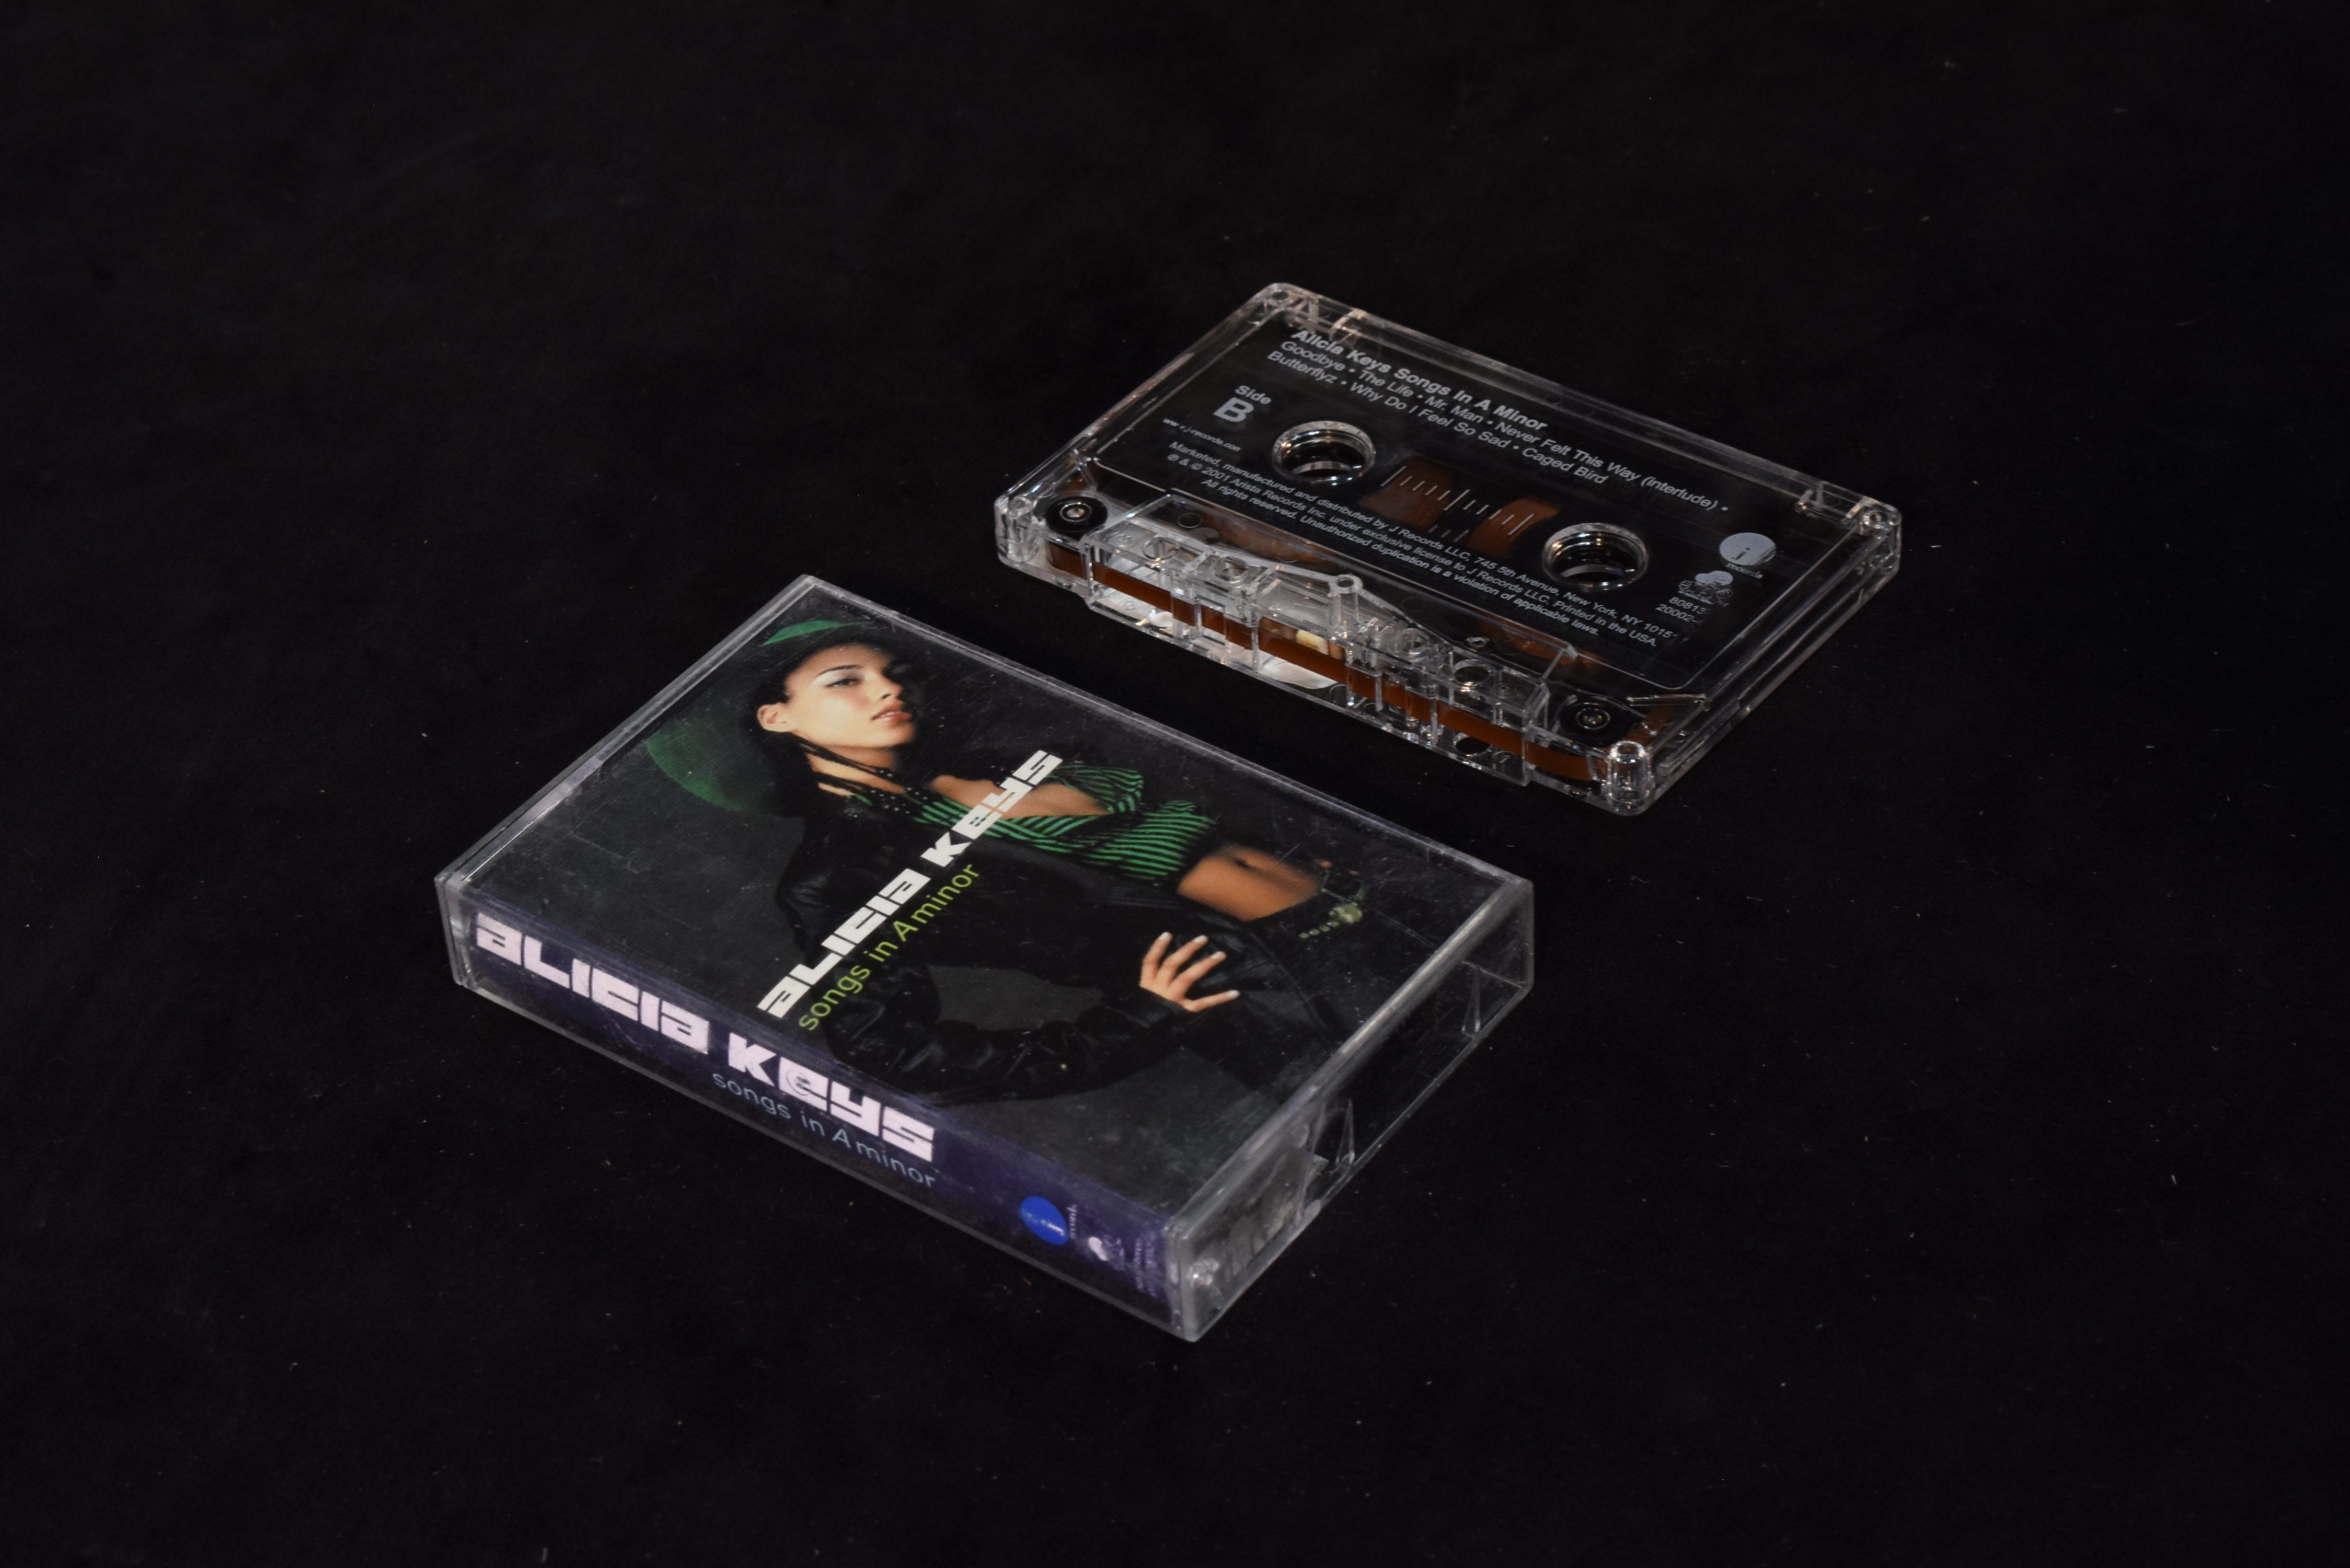 Alicia Keys cassette tape used